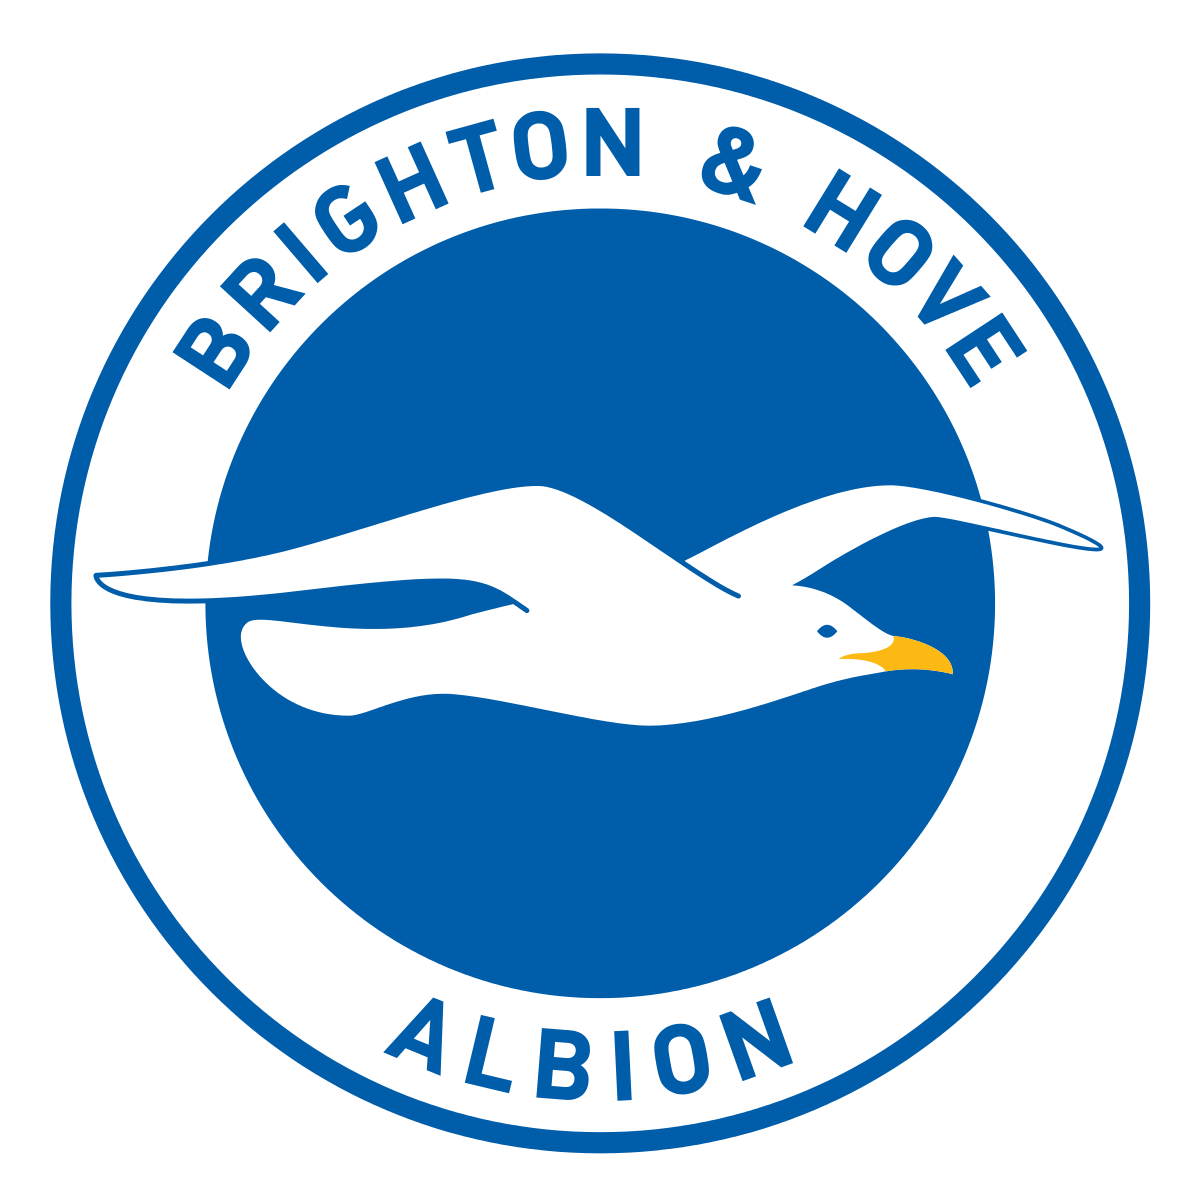 Brighton (u18) team logo